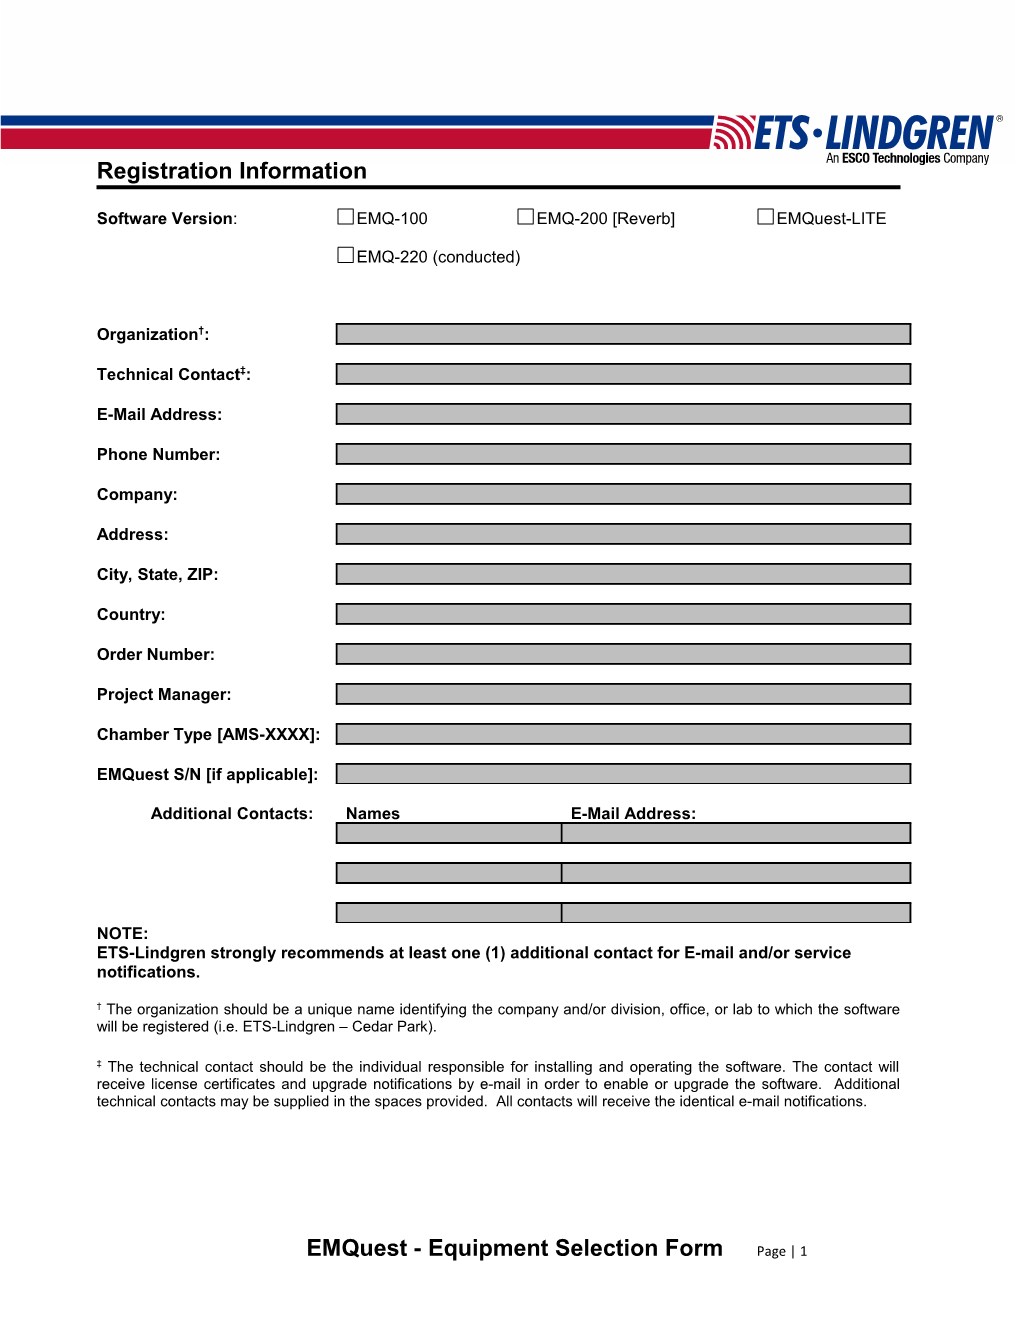 Emquest Optional Equipment Selection Form